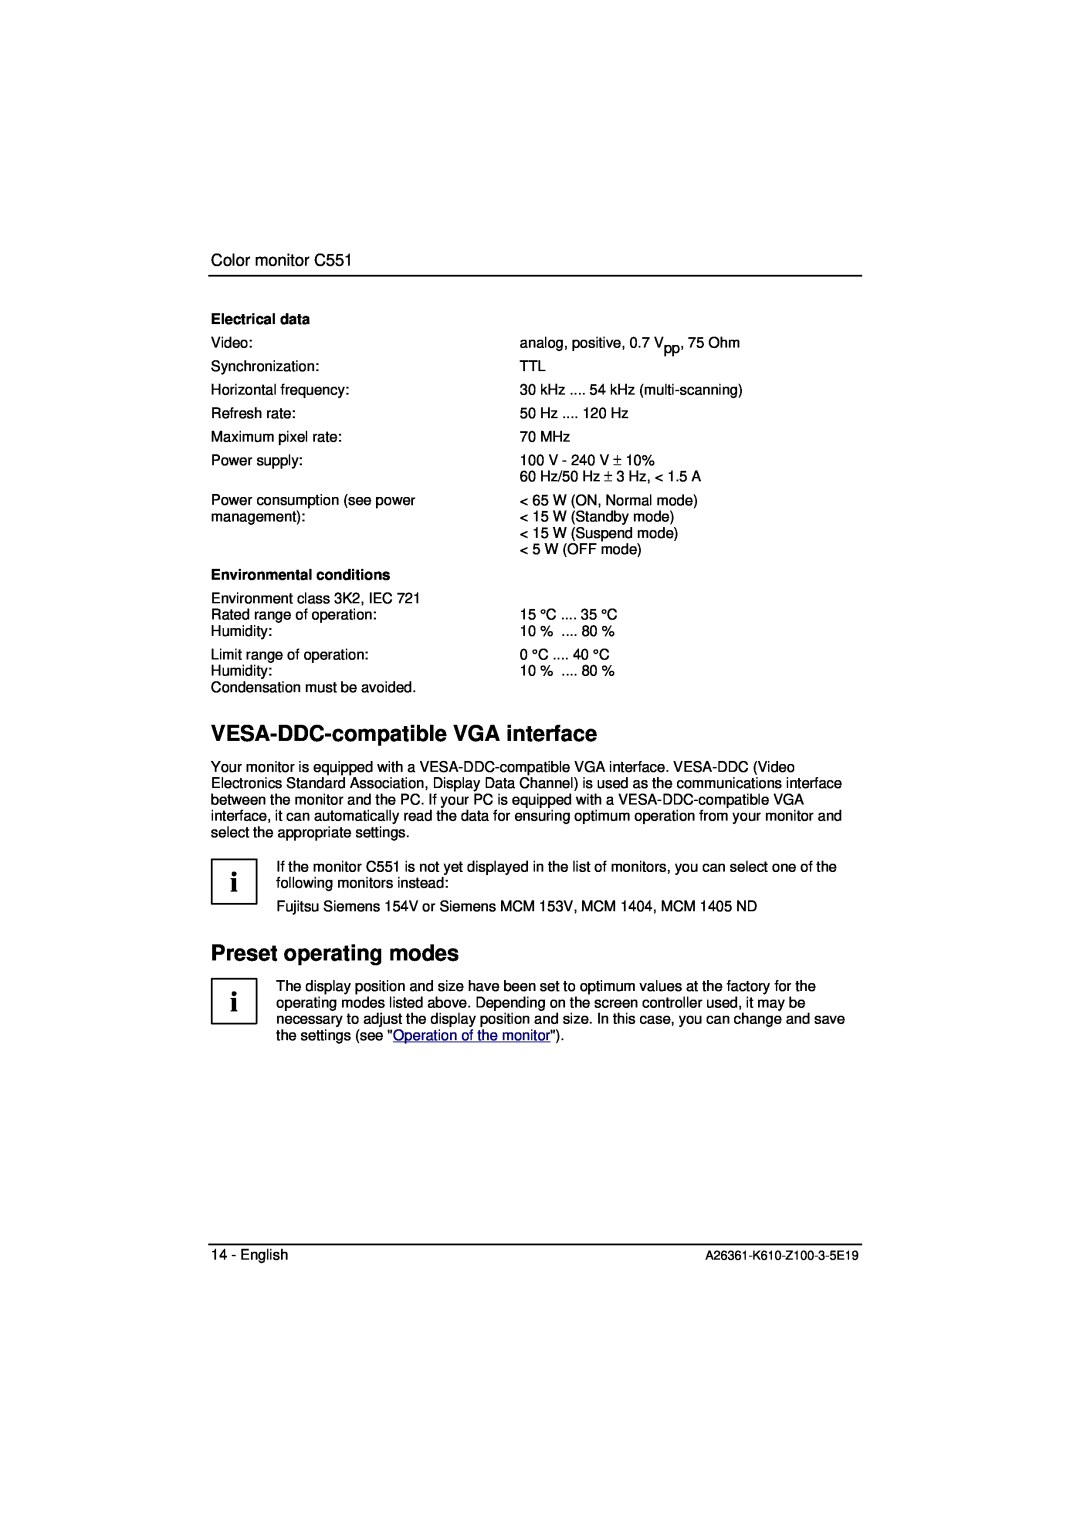 Fujitsu Siemens Computers C551 manual VESA-DDC-compatible VGA interface, Preset operating modes, Electrical data 